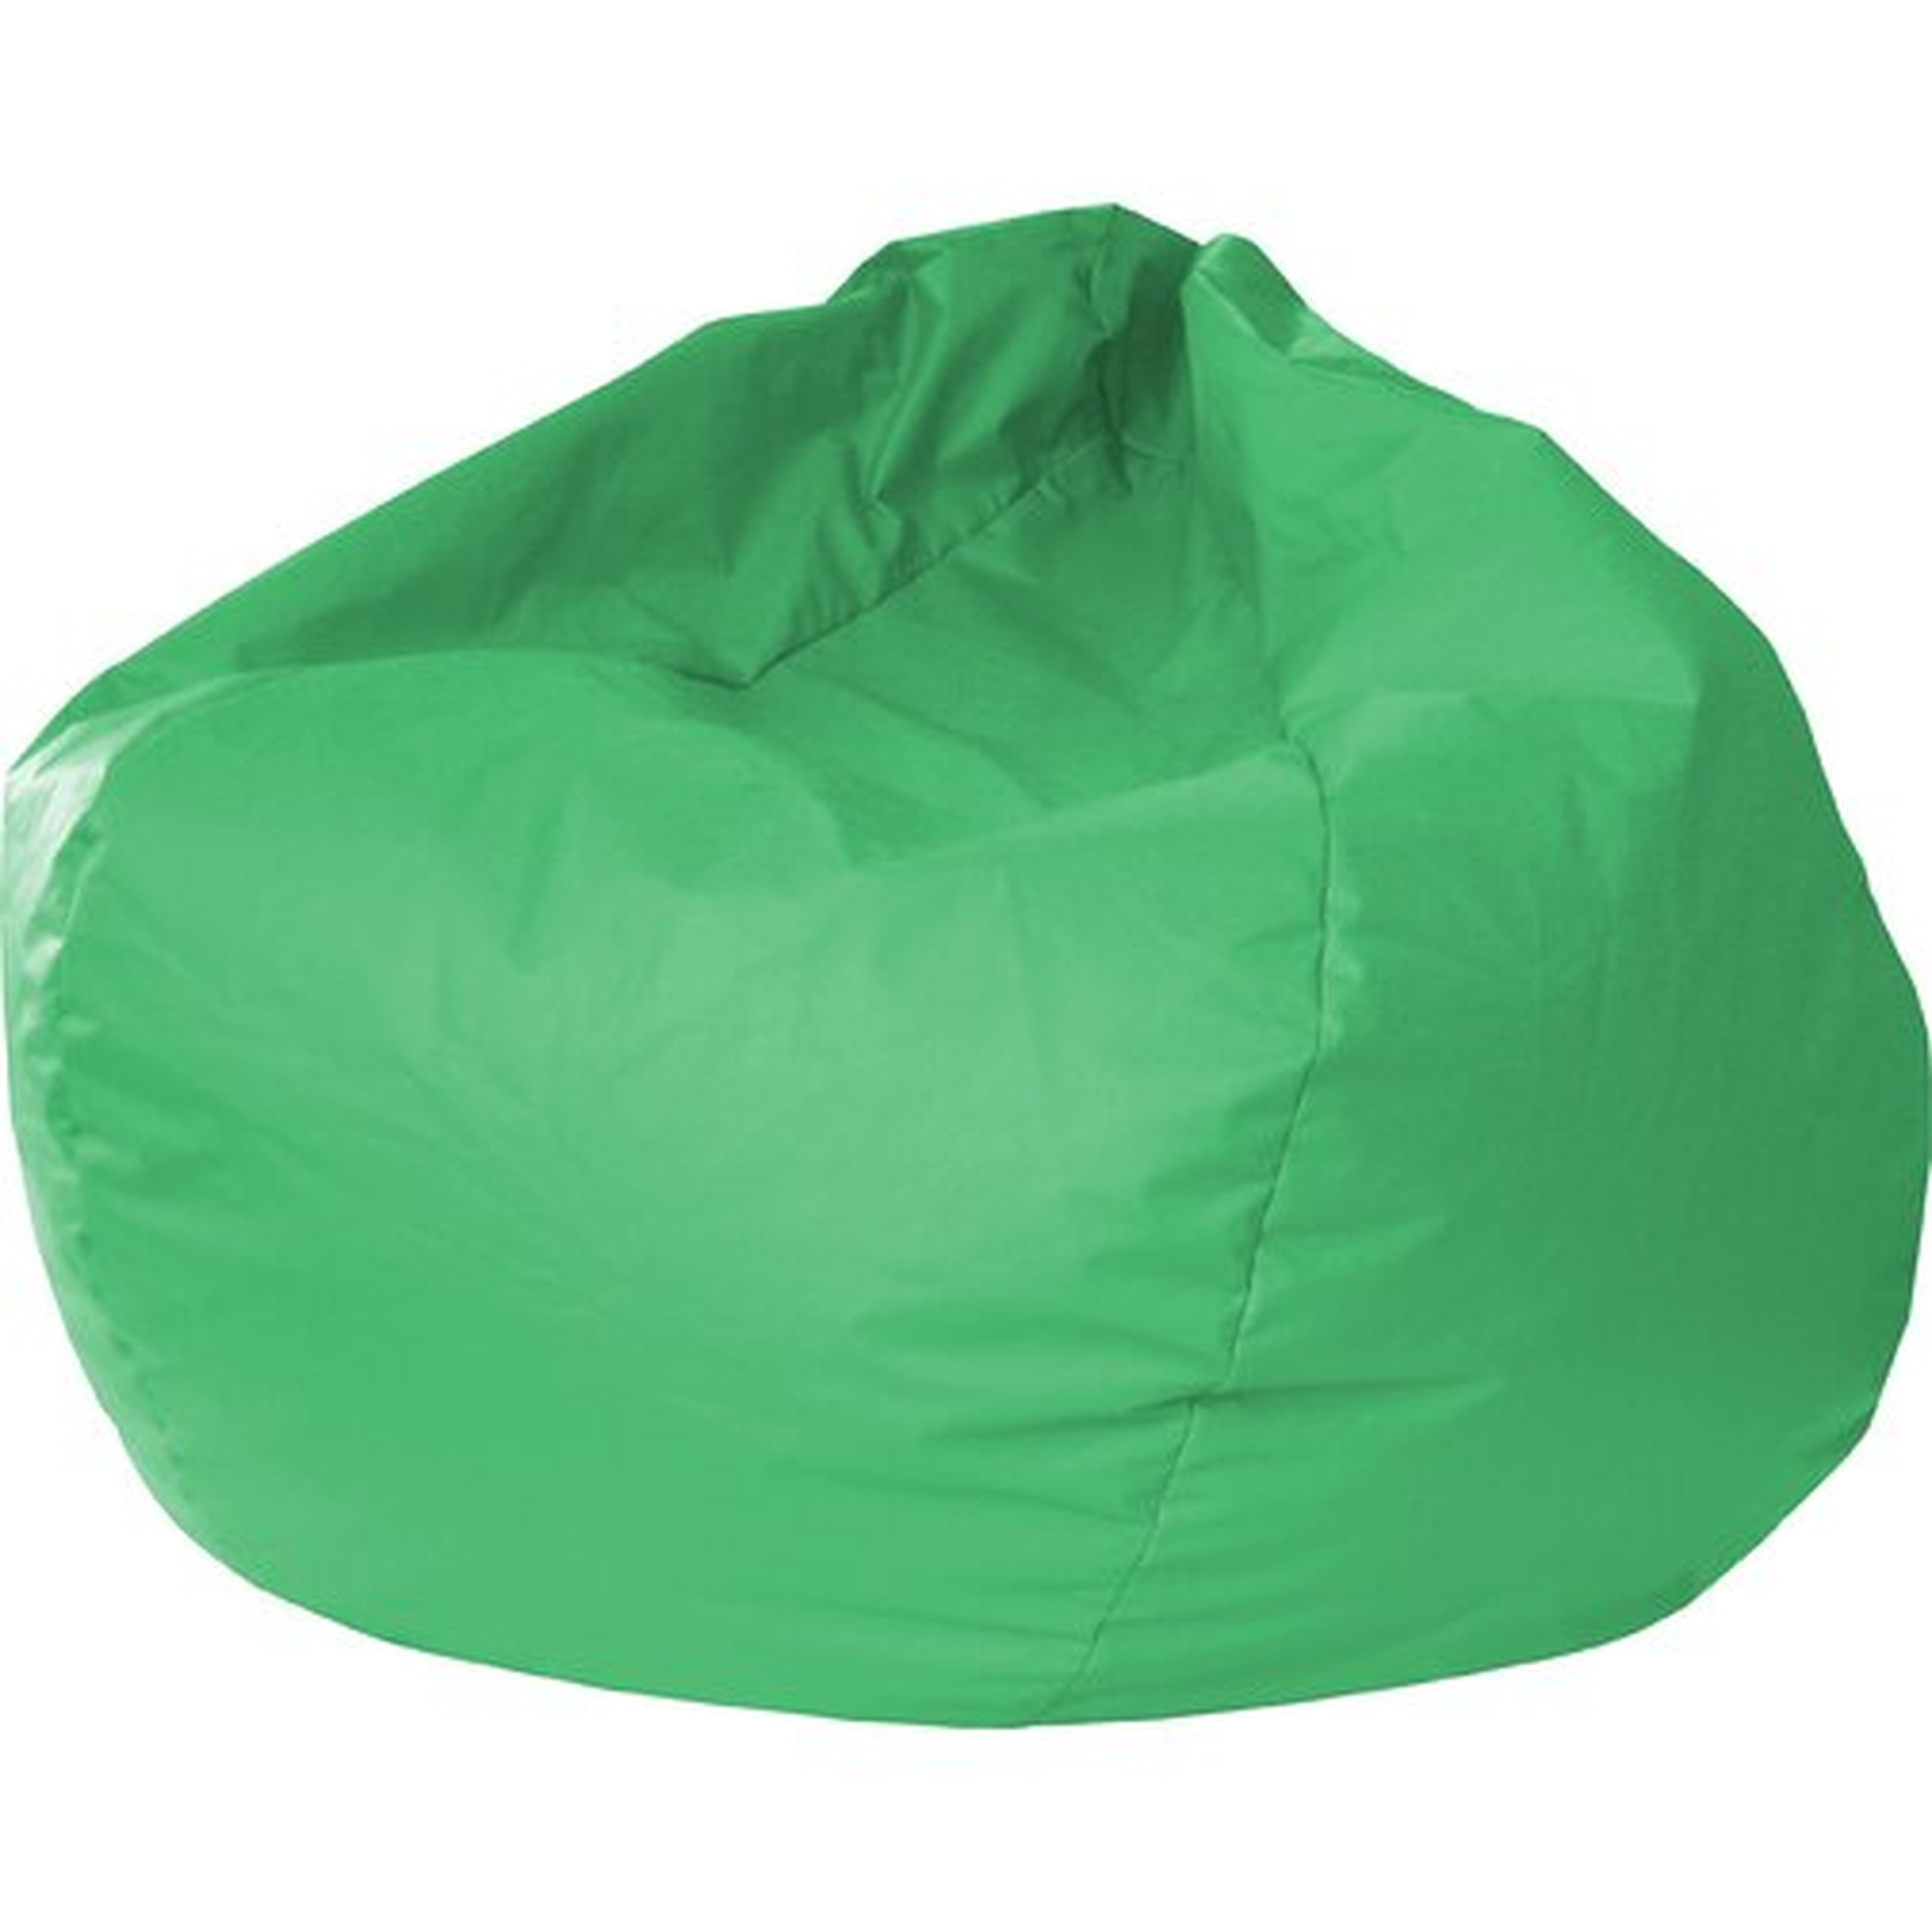 Upholstered Bean Bag Chair - Wayfair